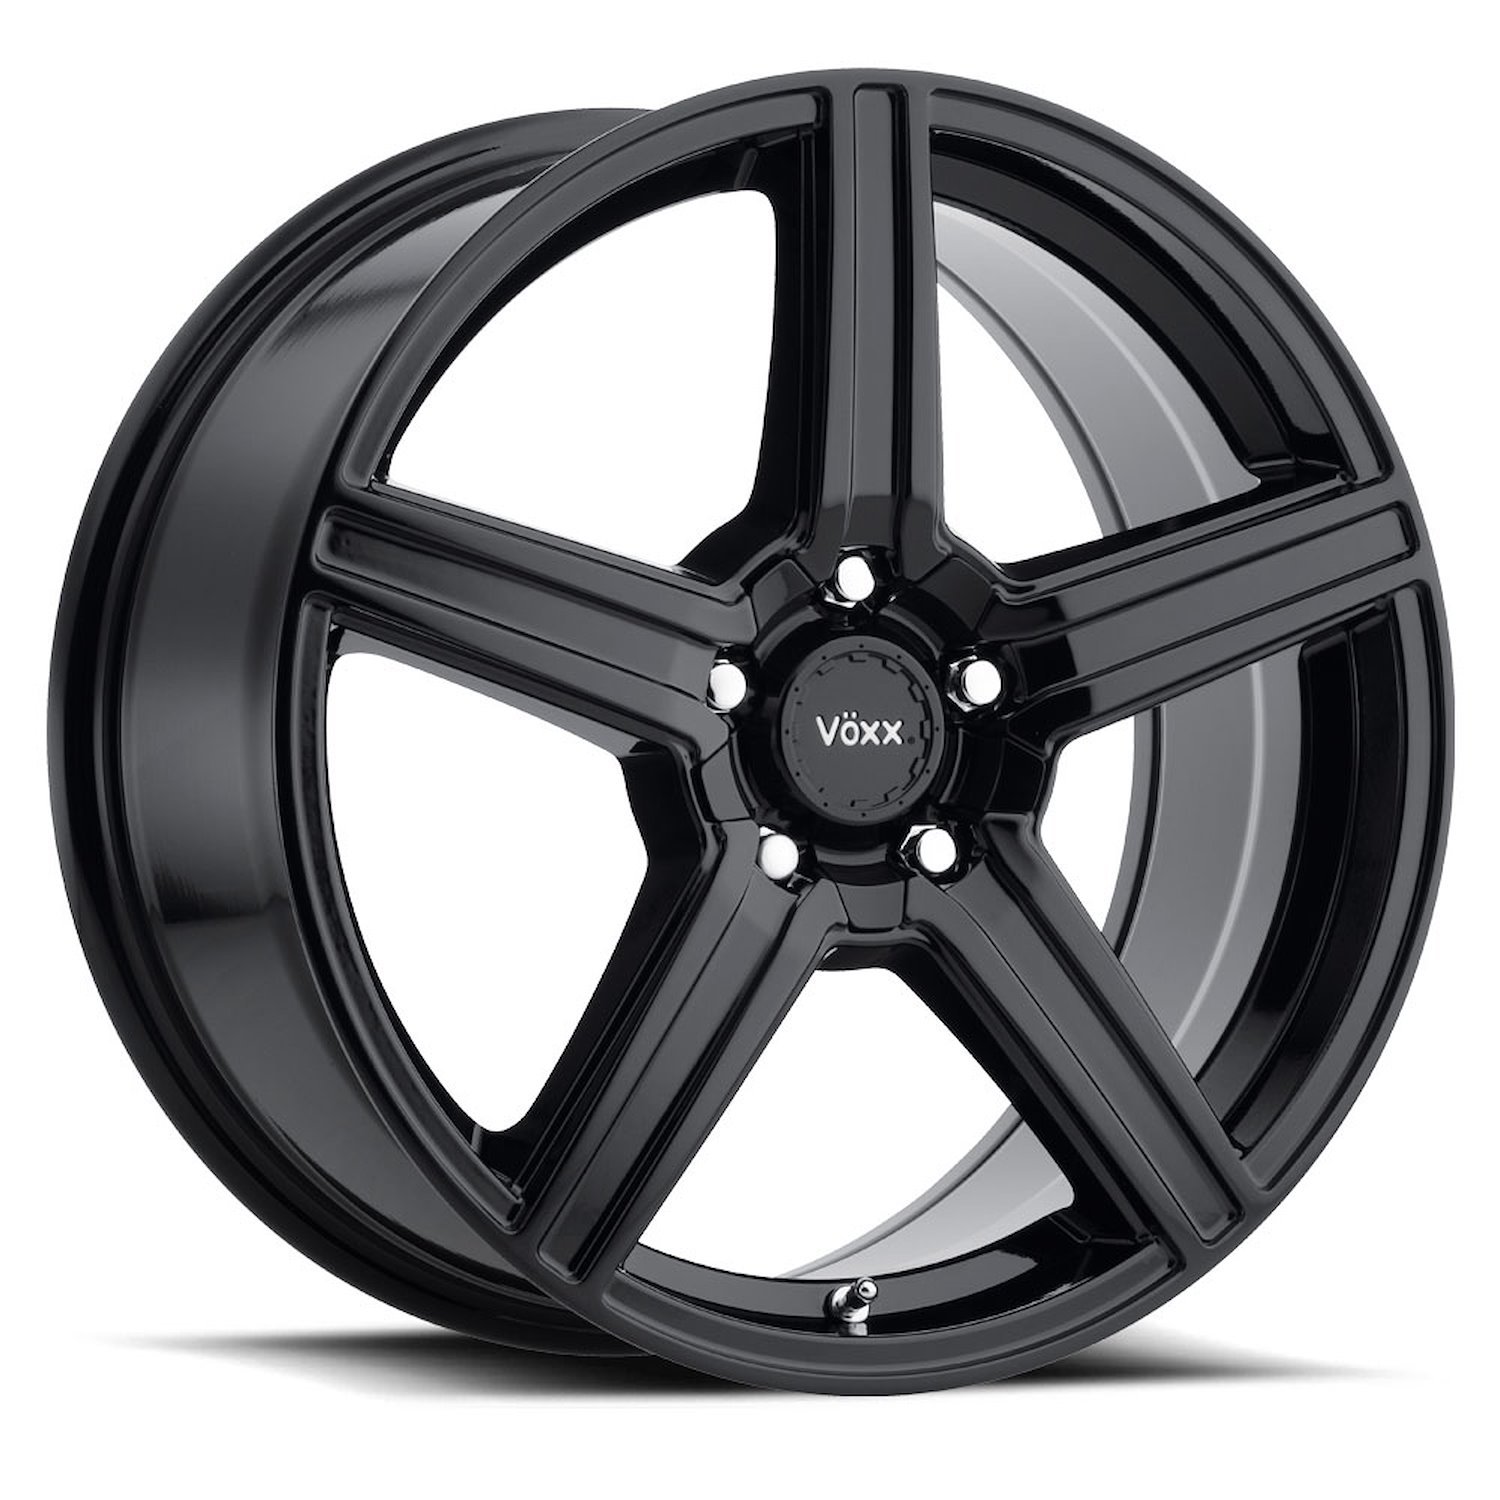 COM 565-5001-40 GB Como Wheel [Size: 15" x 6.50"] Finish: Gloss Black